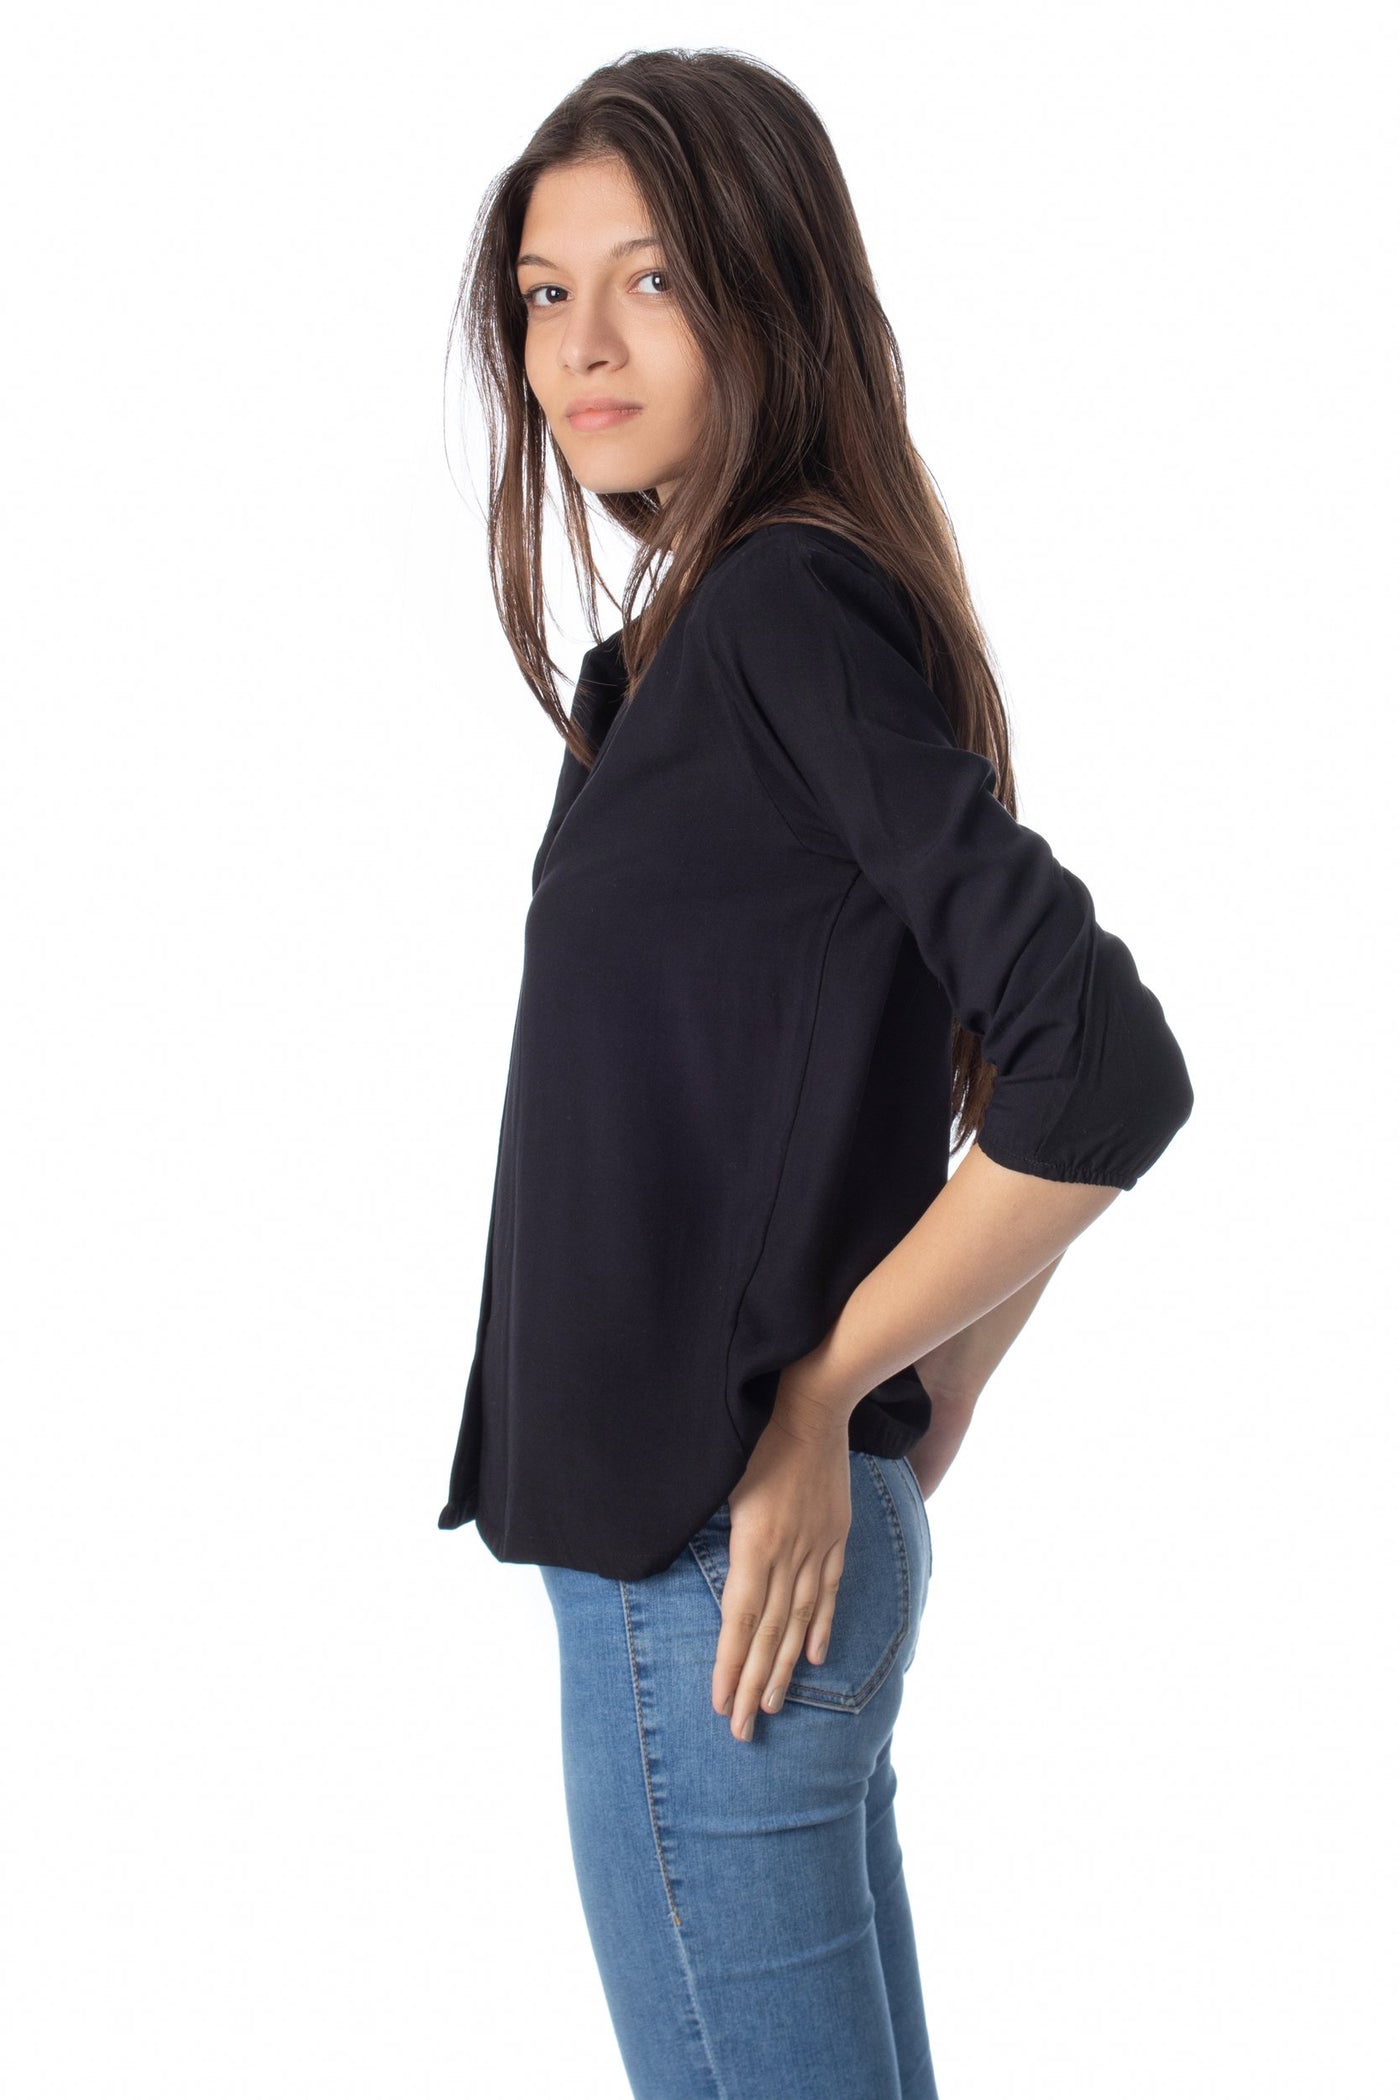 chassca 3/4 puff sleeve Shirt blouse - Breakmood